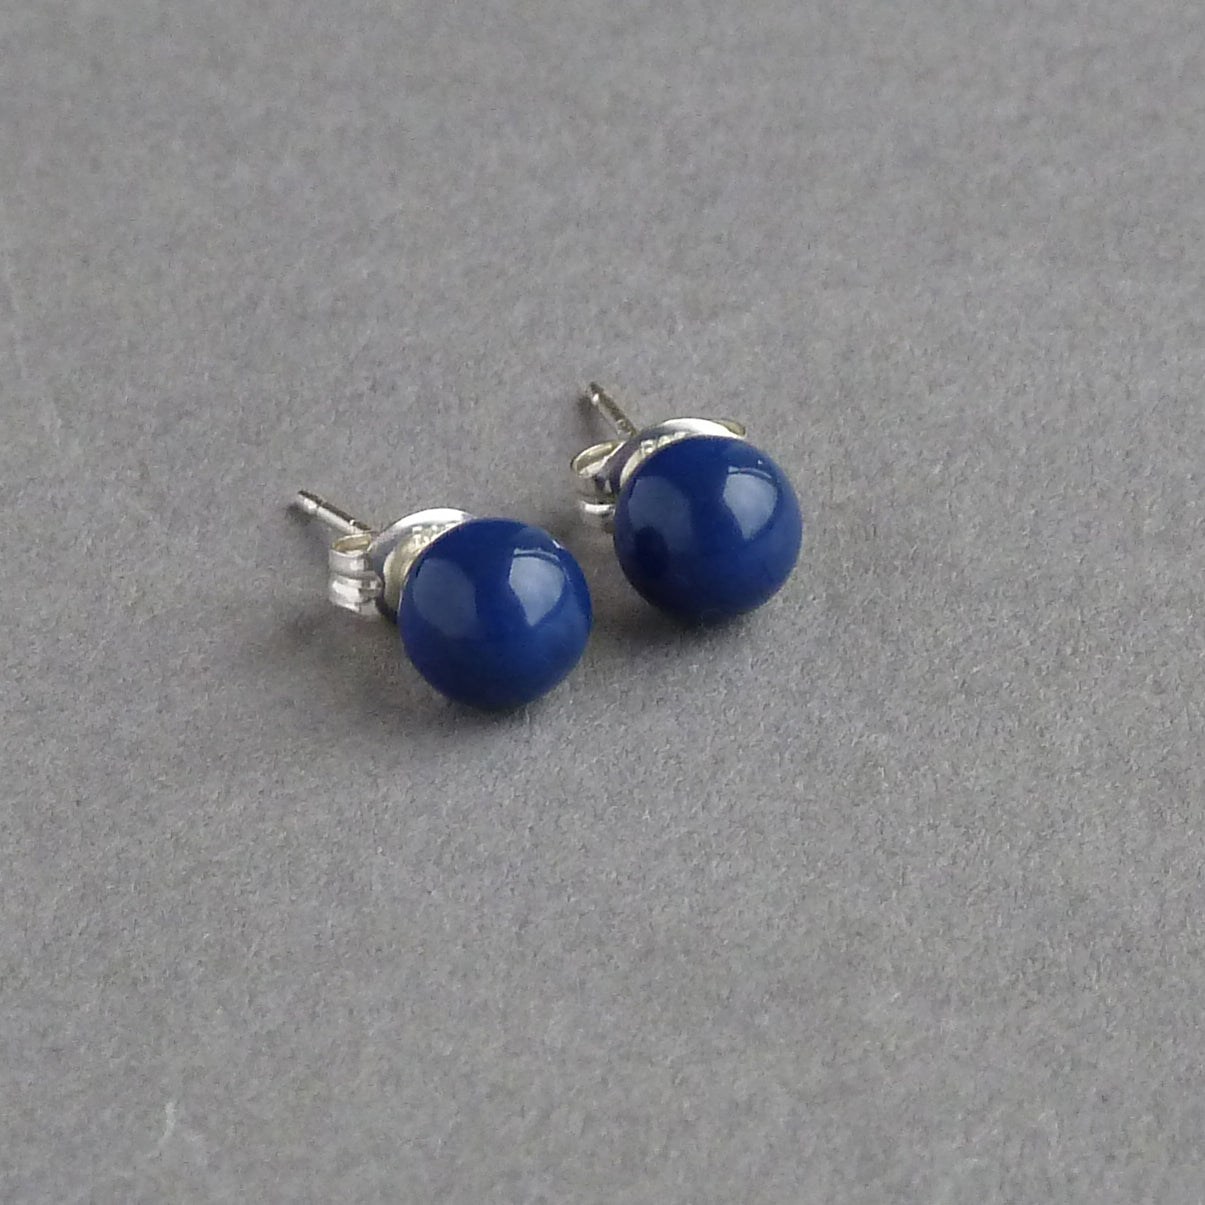 6mm dark blue stud earrings